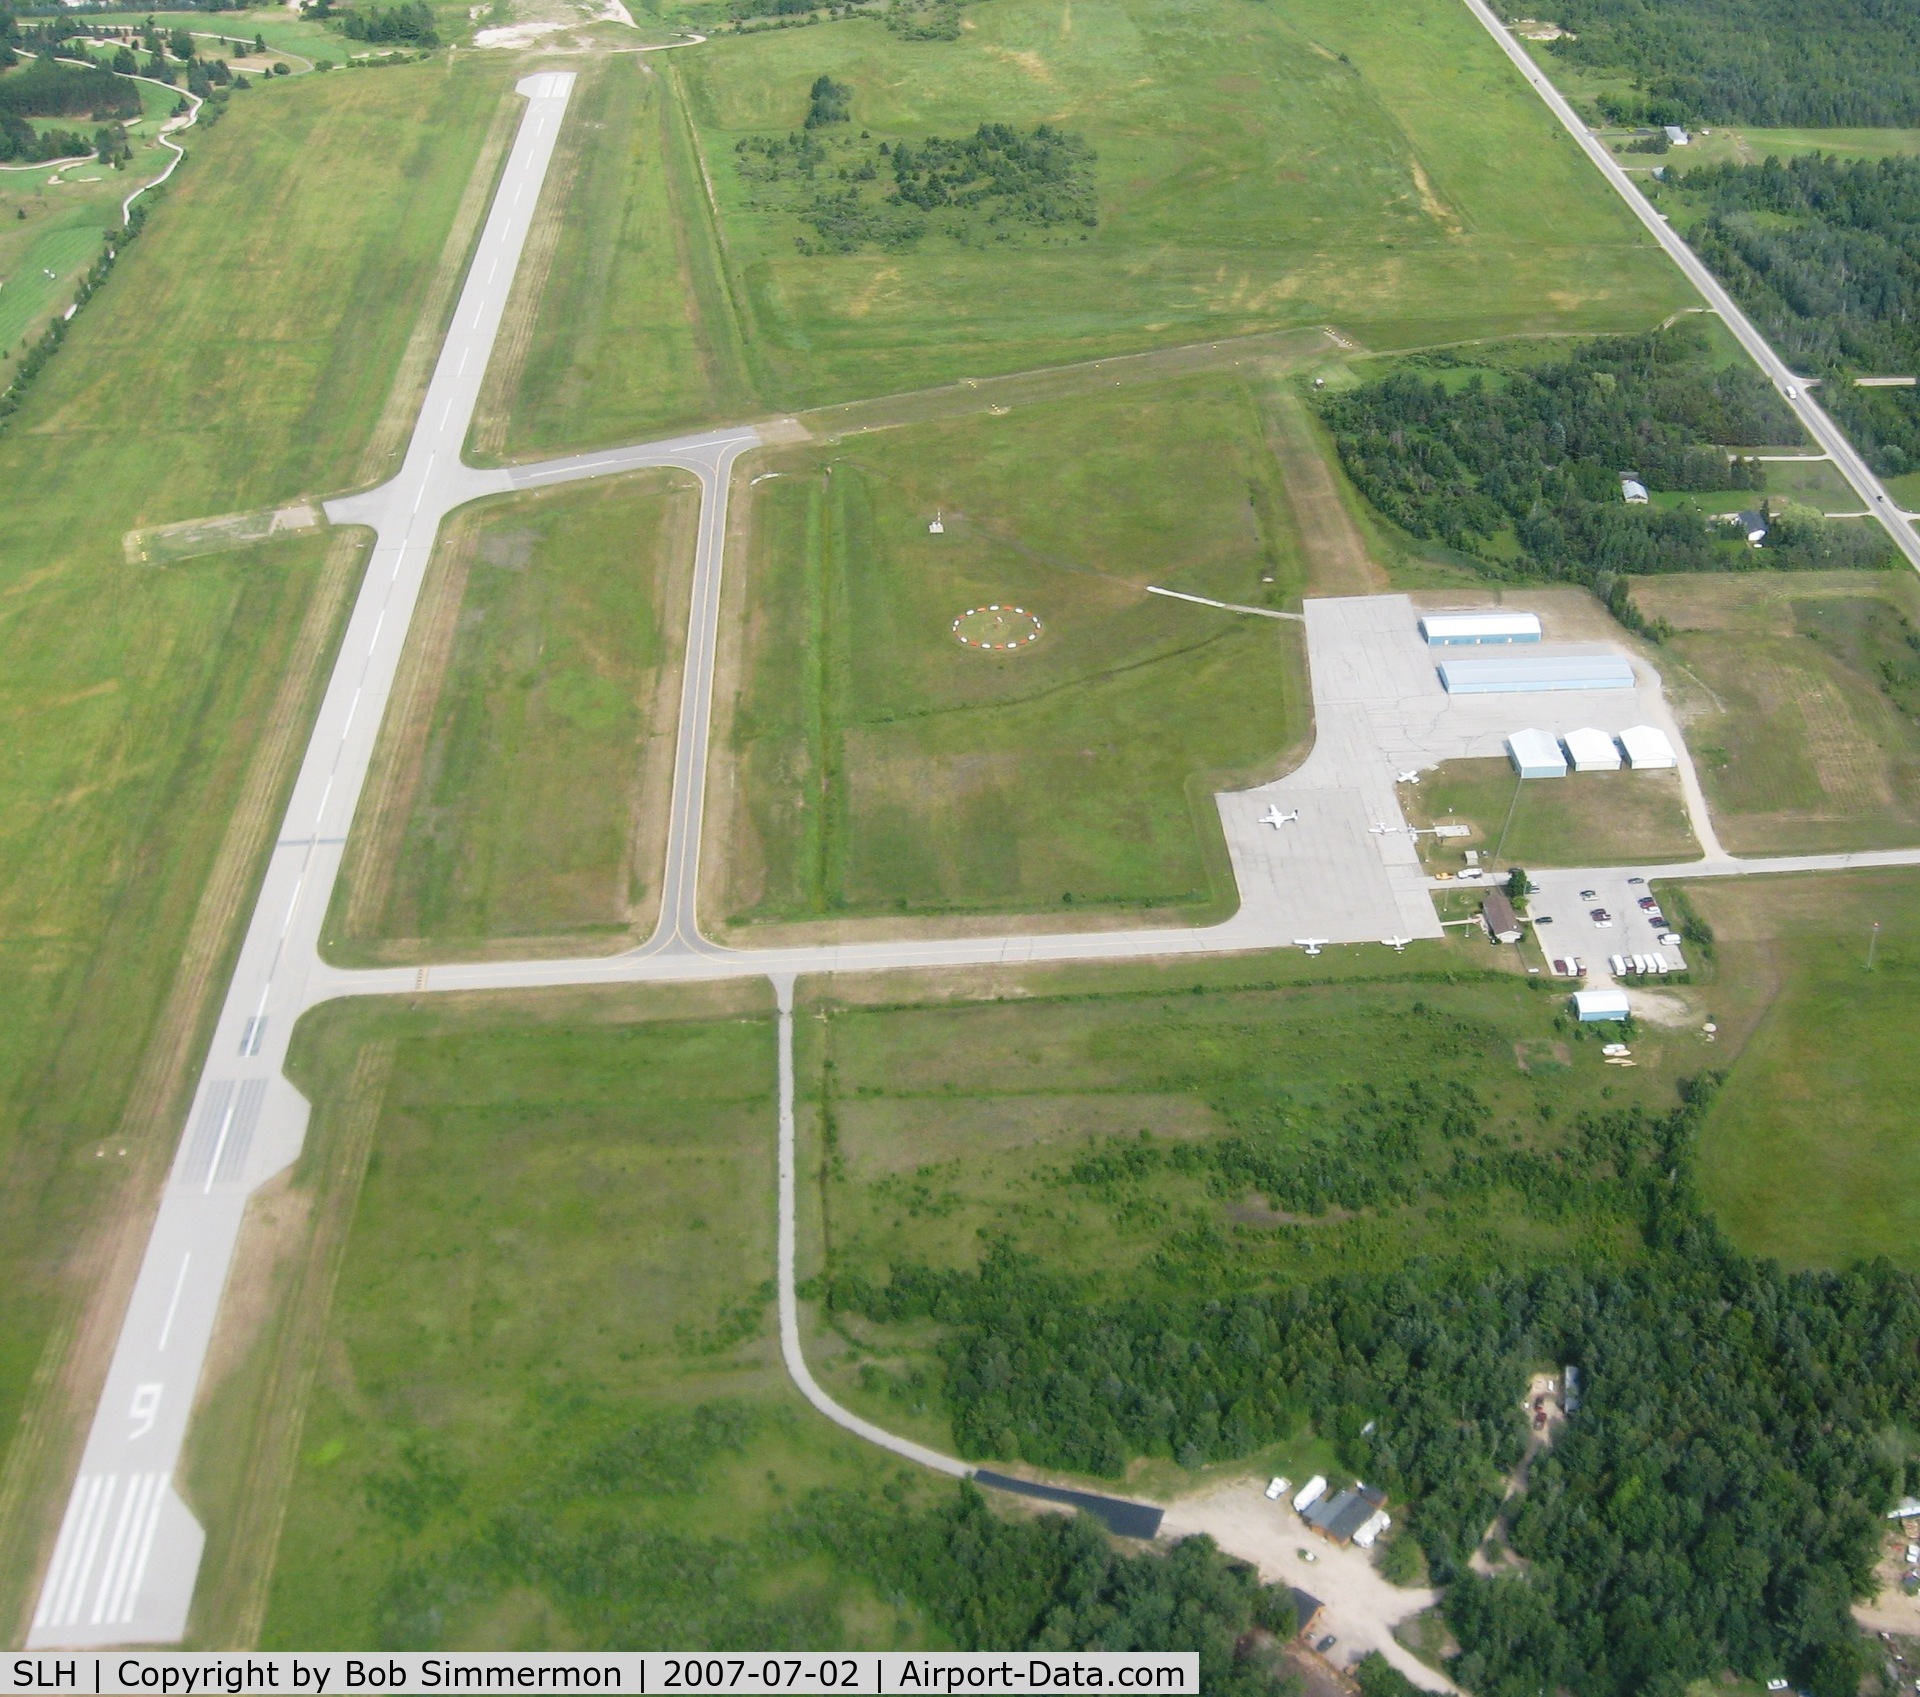 Cheboygan County Airport (SLH) - View from pattern altitude over Cheboygan, MI